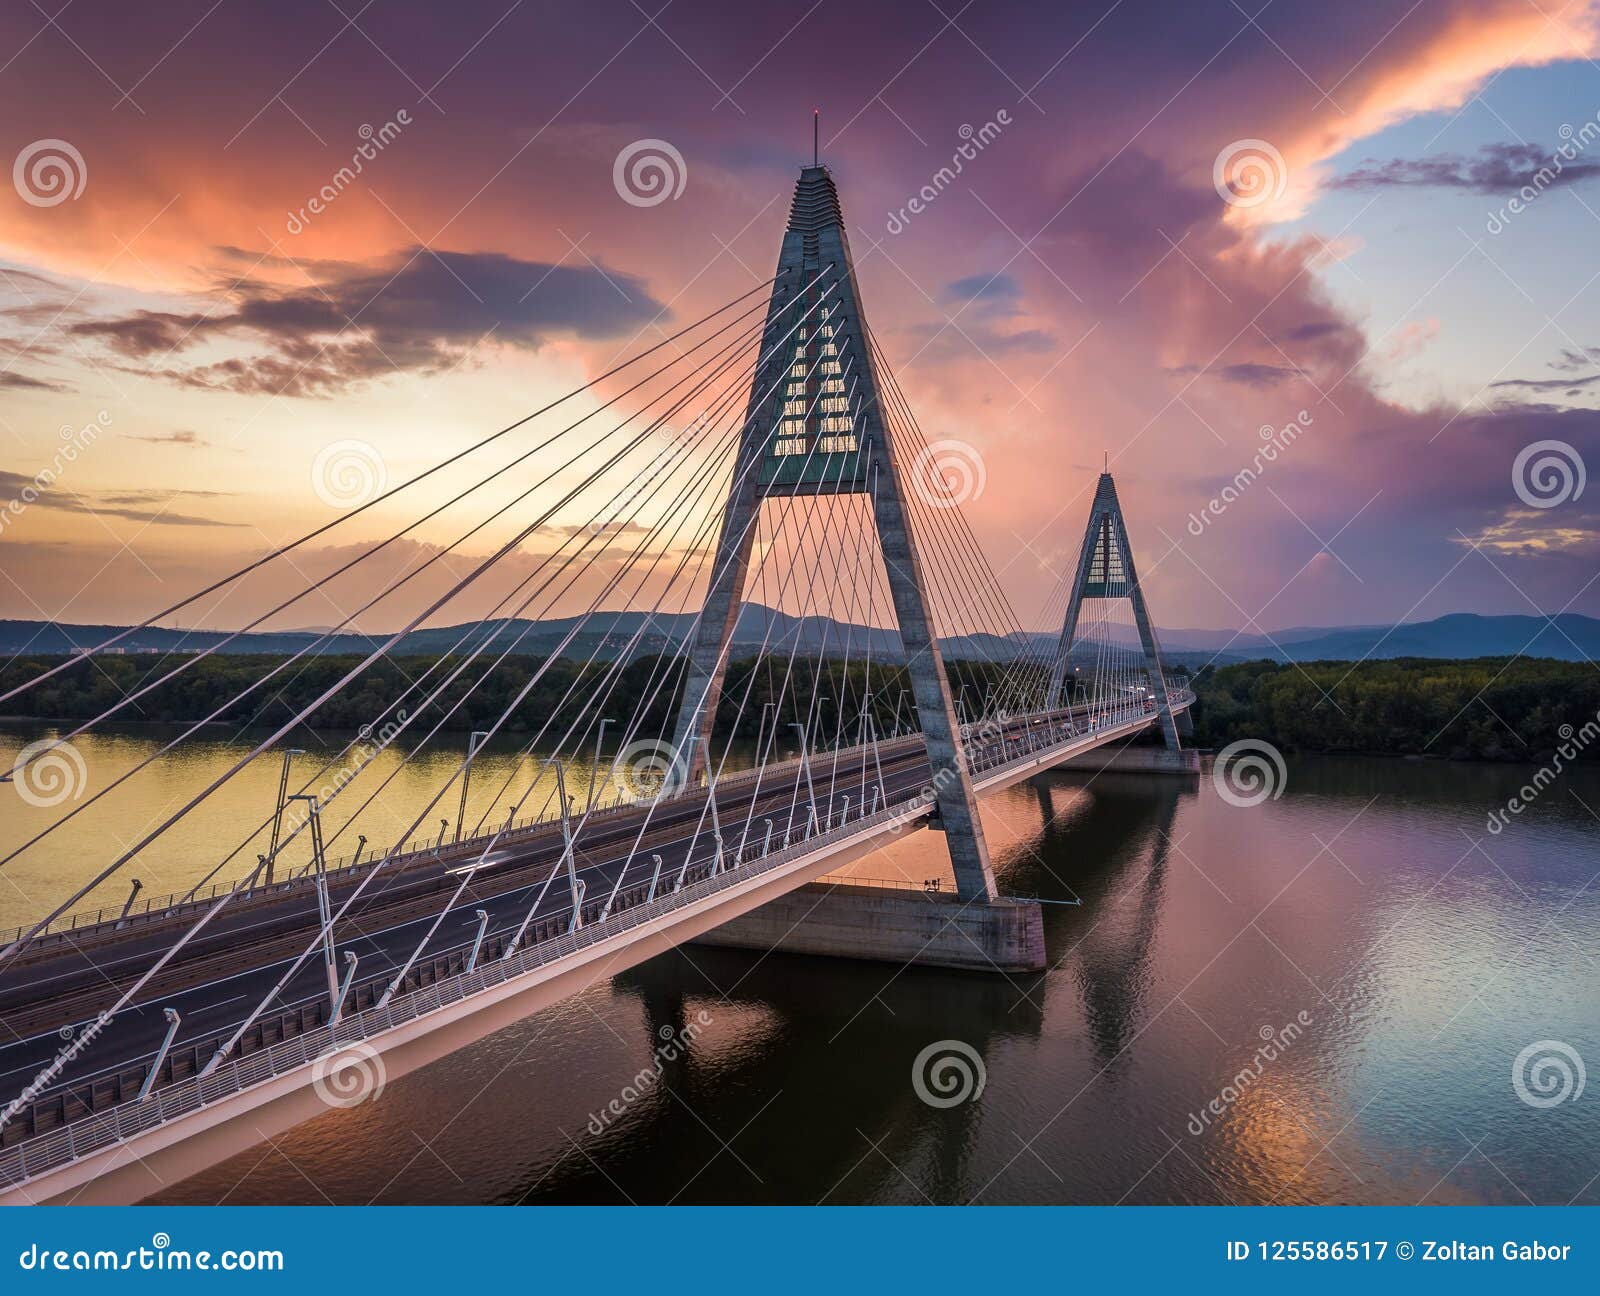 budapest, hungary - megyeri bridge over river danube at sunset with beautiful dramatic clouds